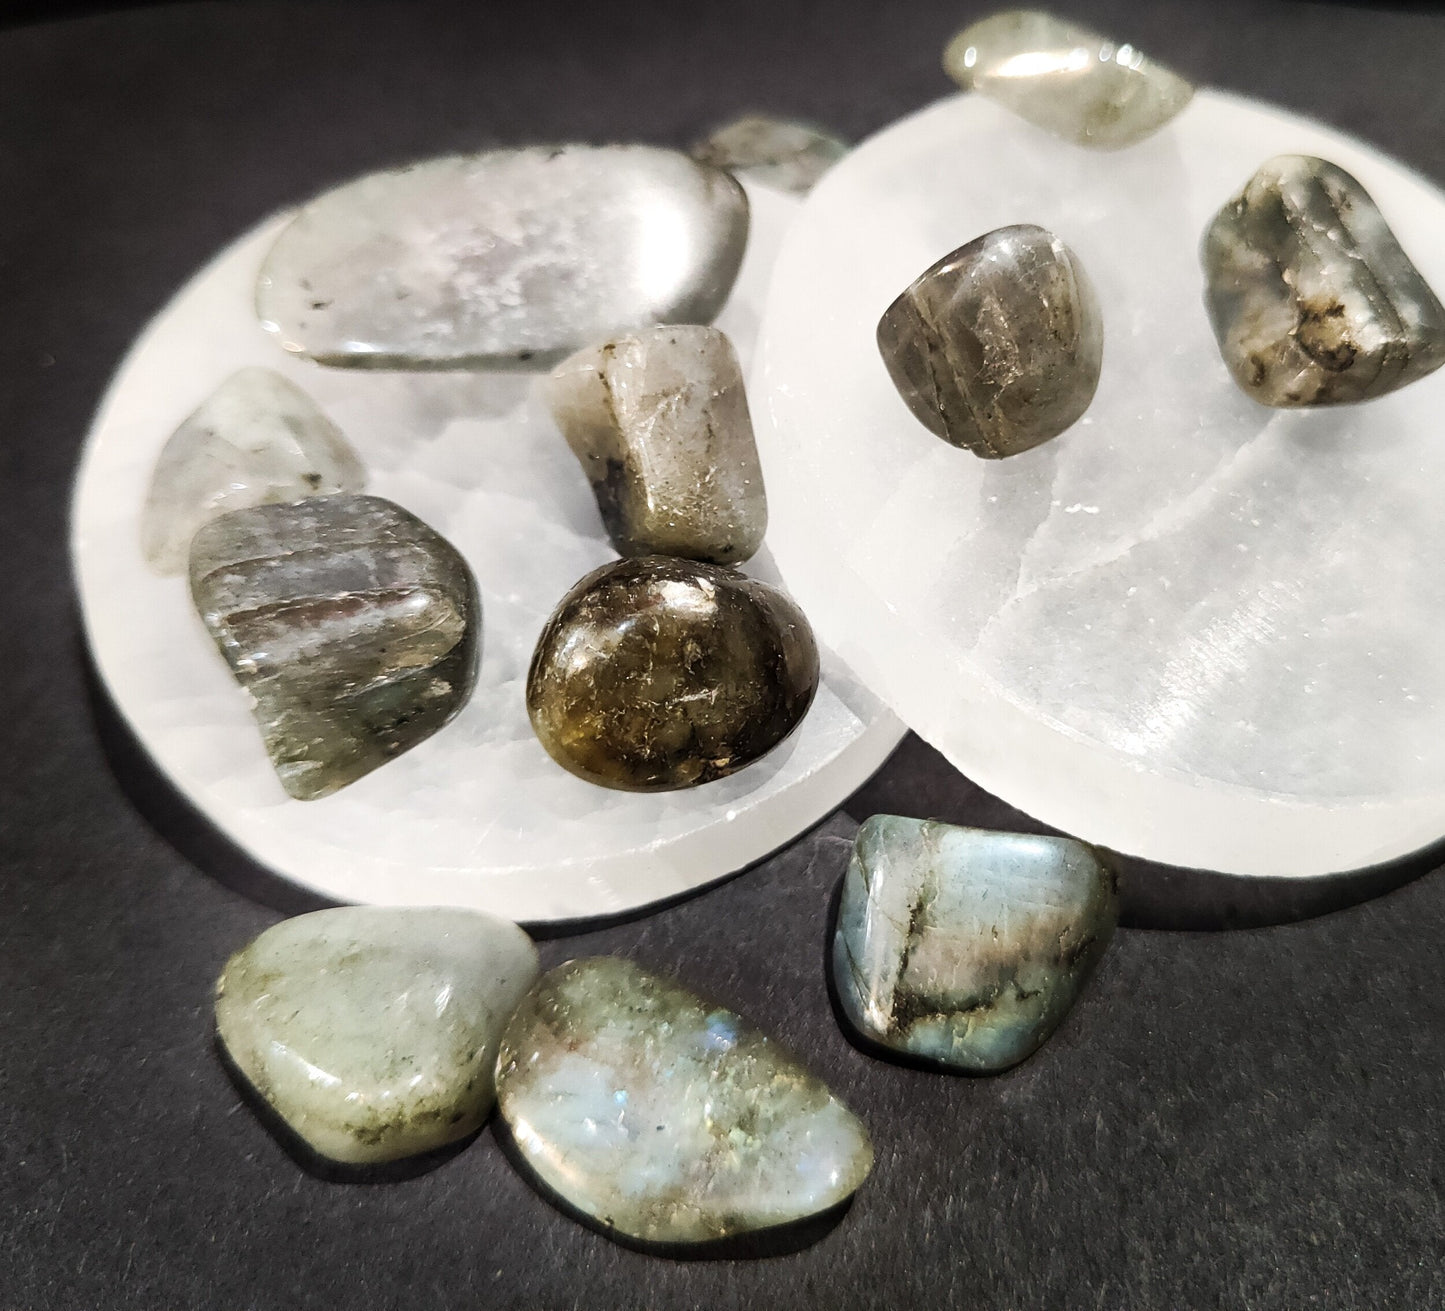 Labradorite - The Transformation Stone